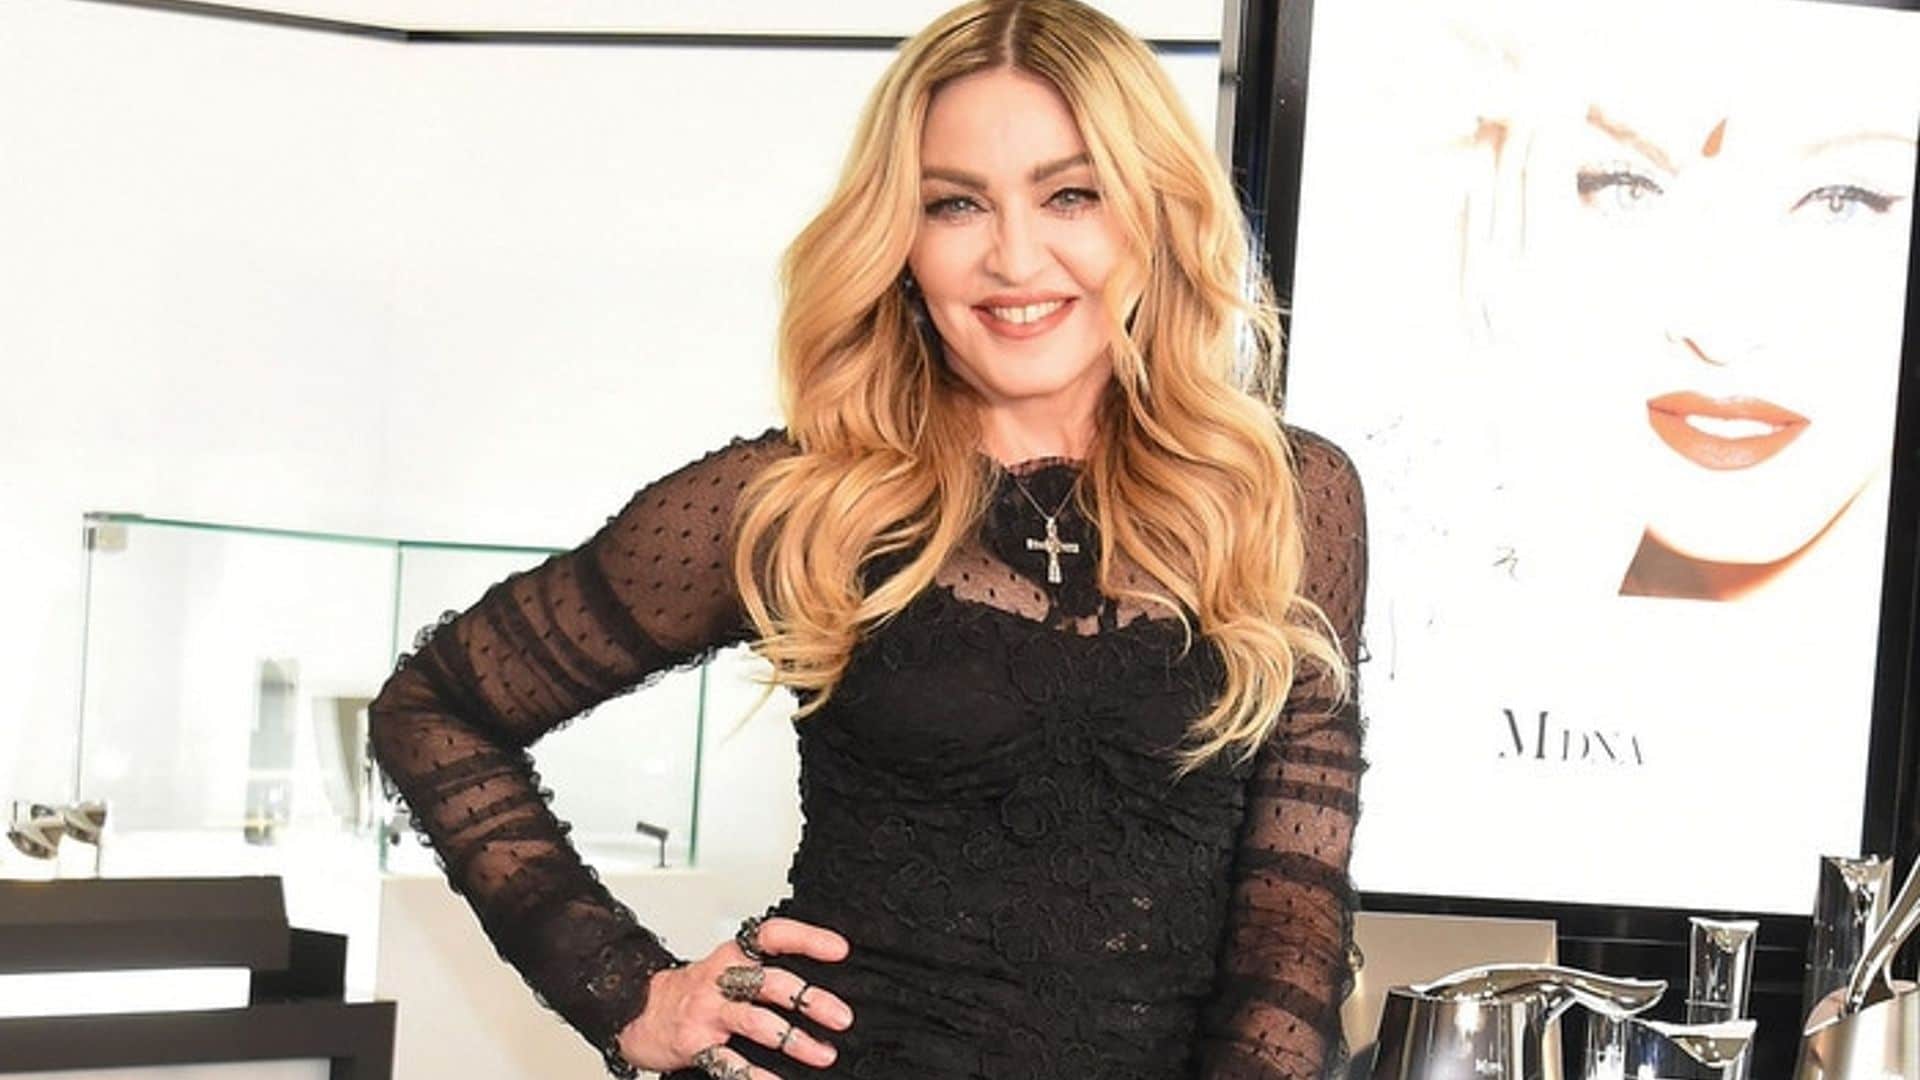 Madonna explains her on-stage concert behavior – and thanks her fans – in Instagram post